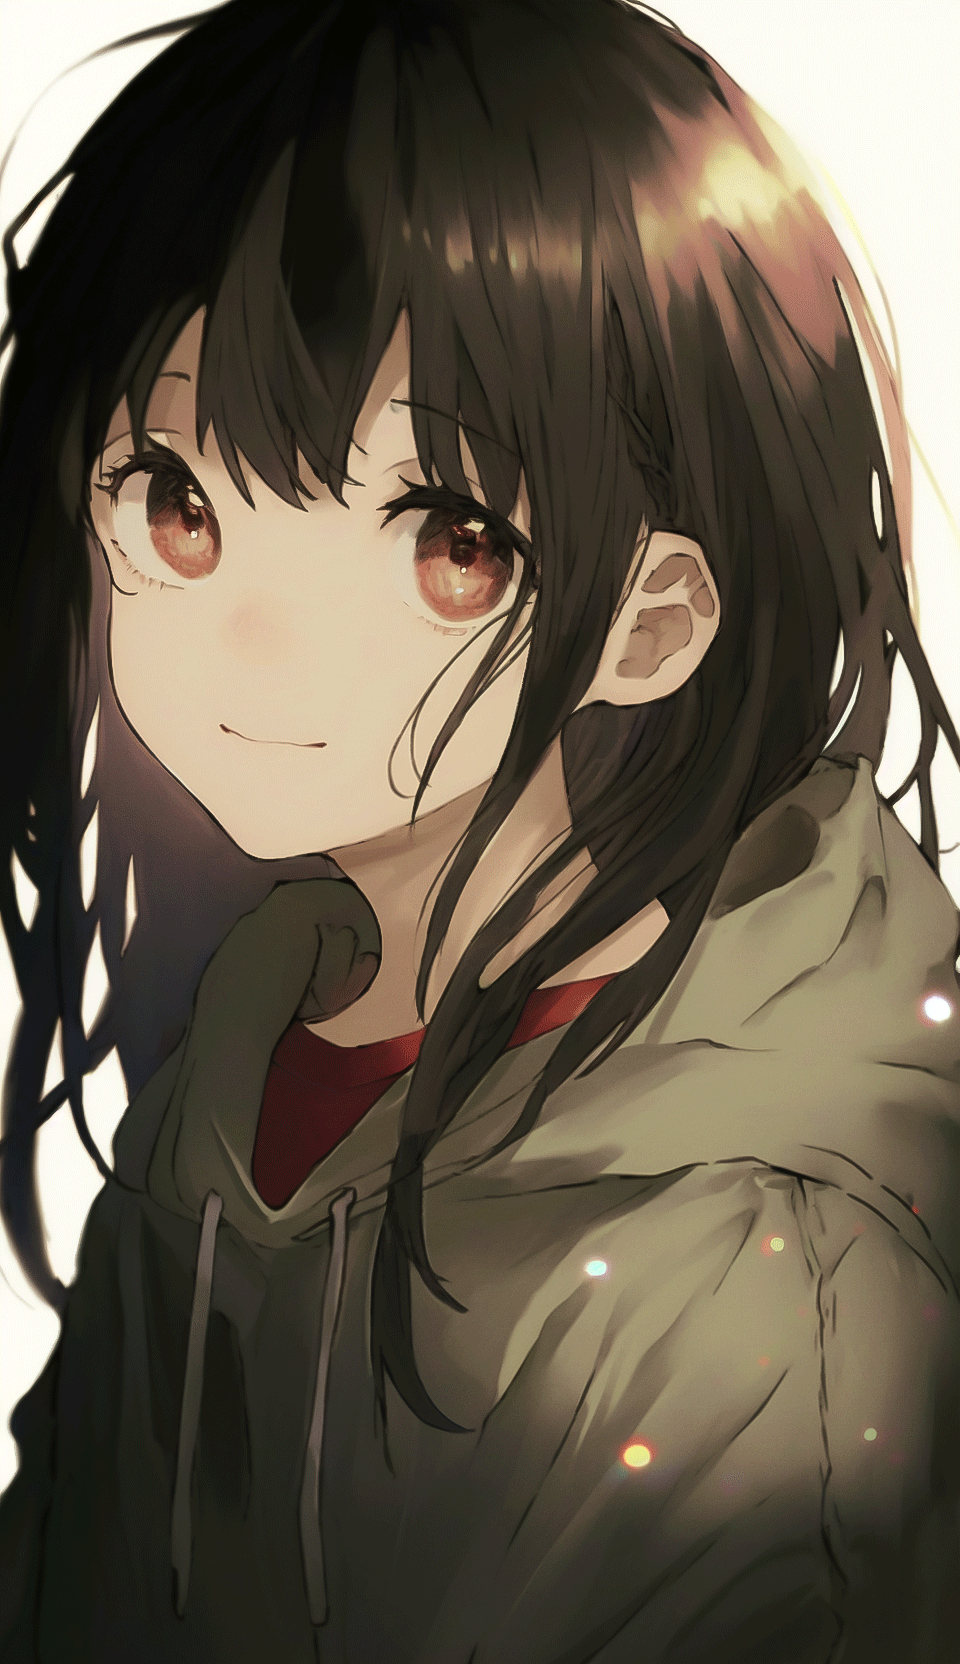 cute anime girl by AI-NIJI on DeviantArt